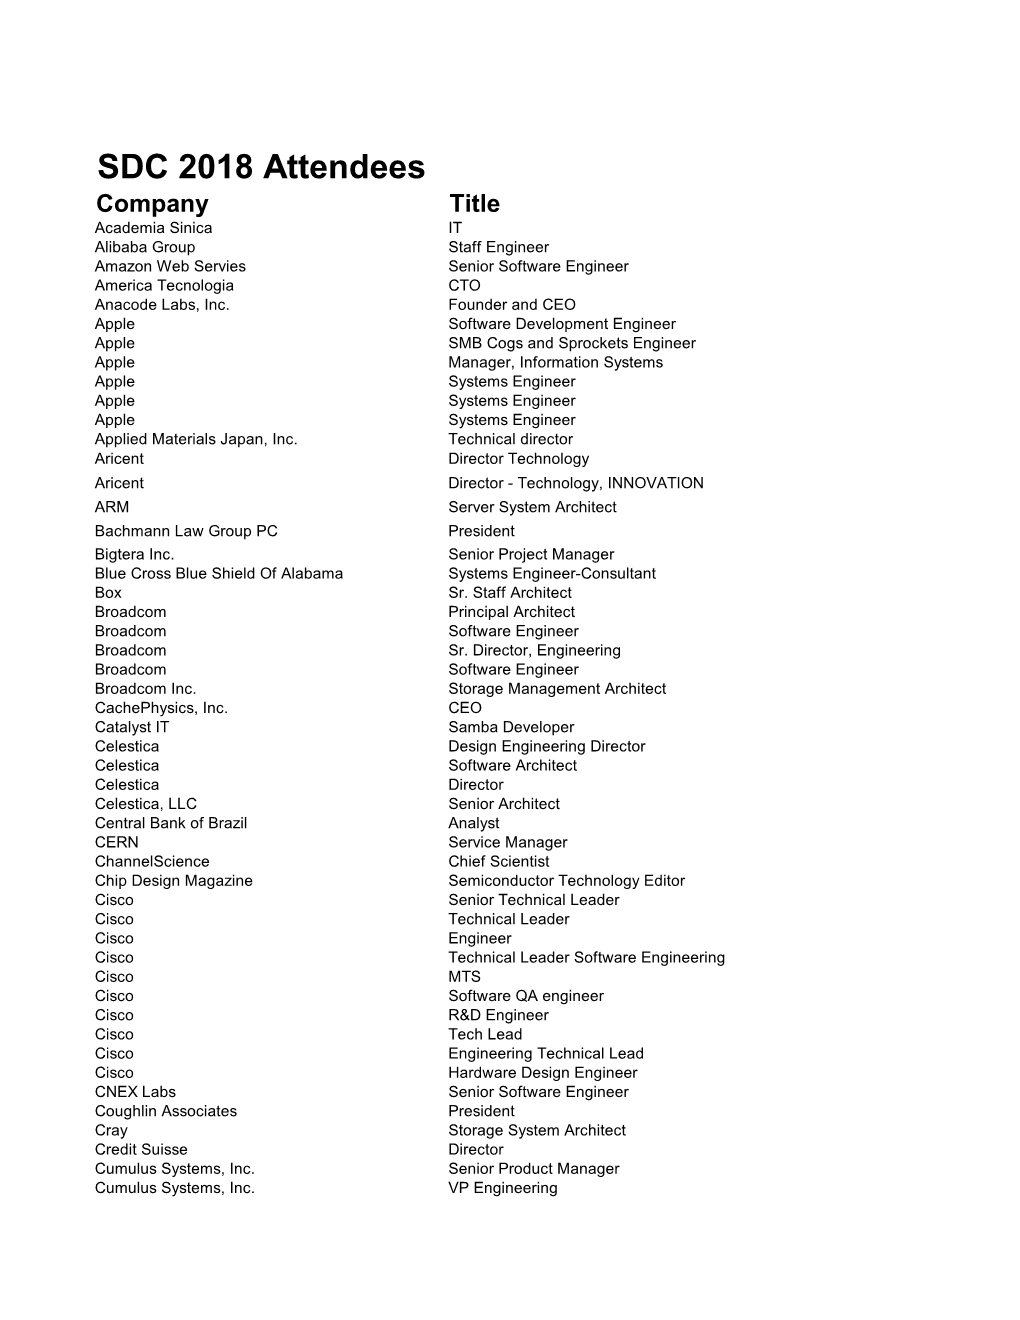 SDC 2018 Attendees Company Title Academia Sinica IT Alibaba Group Staff Engineer Amazon Web Servies Senior Software Engineer America Tecnologia CTO Anacode Labs, Inc